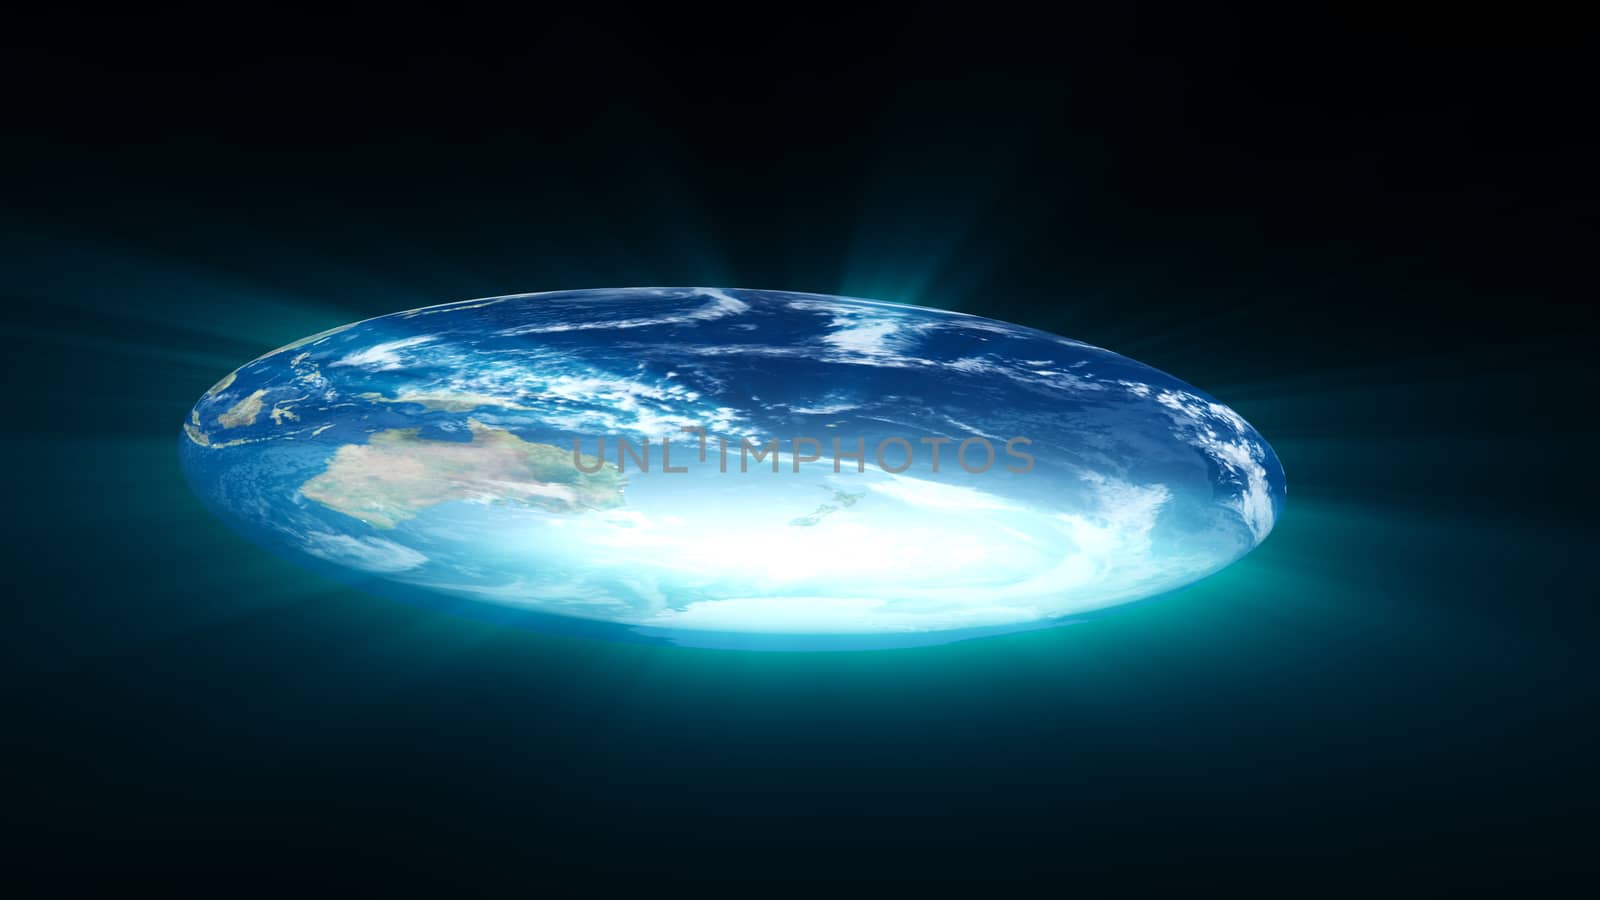 Flat Earth on black background. Digital illustration by nolimit046